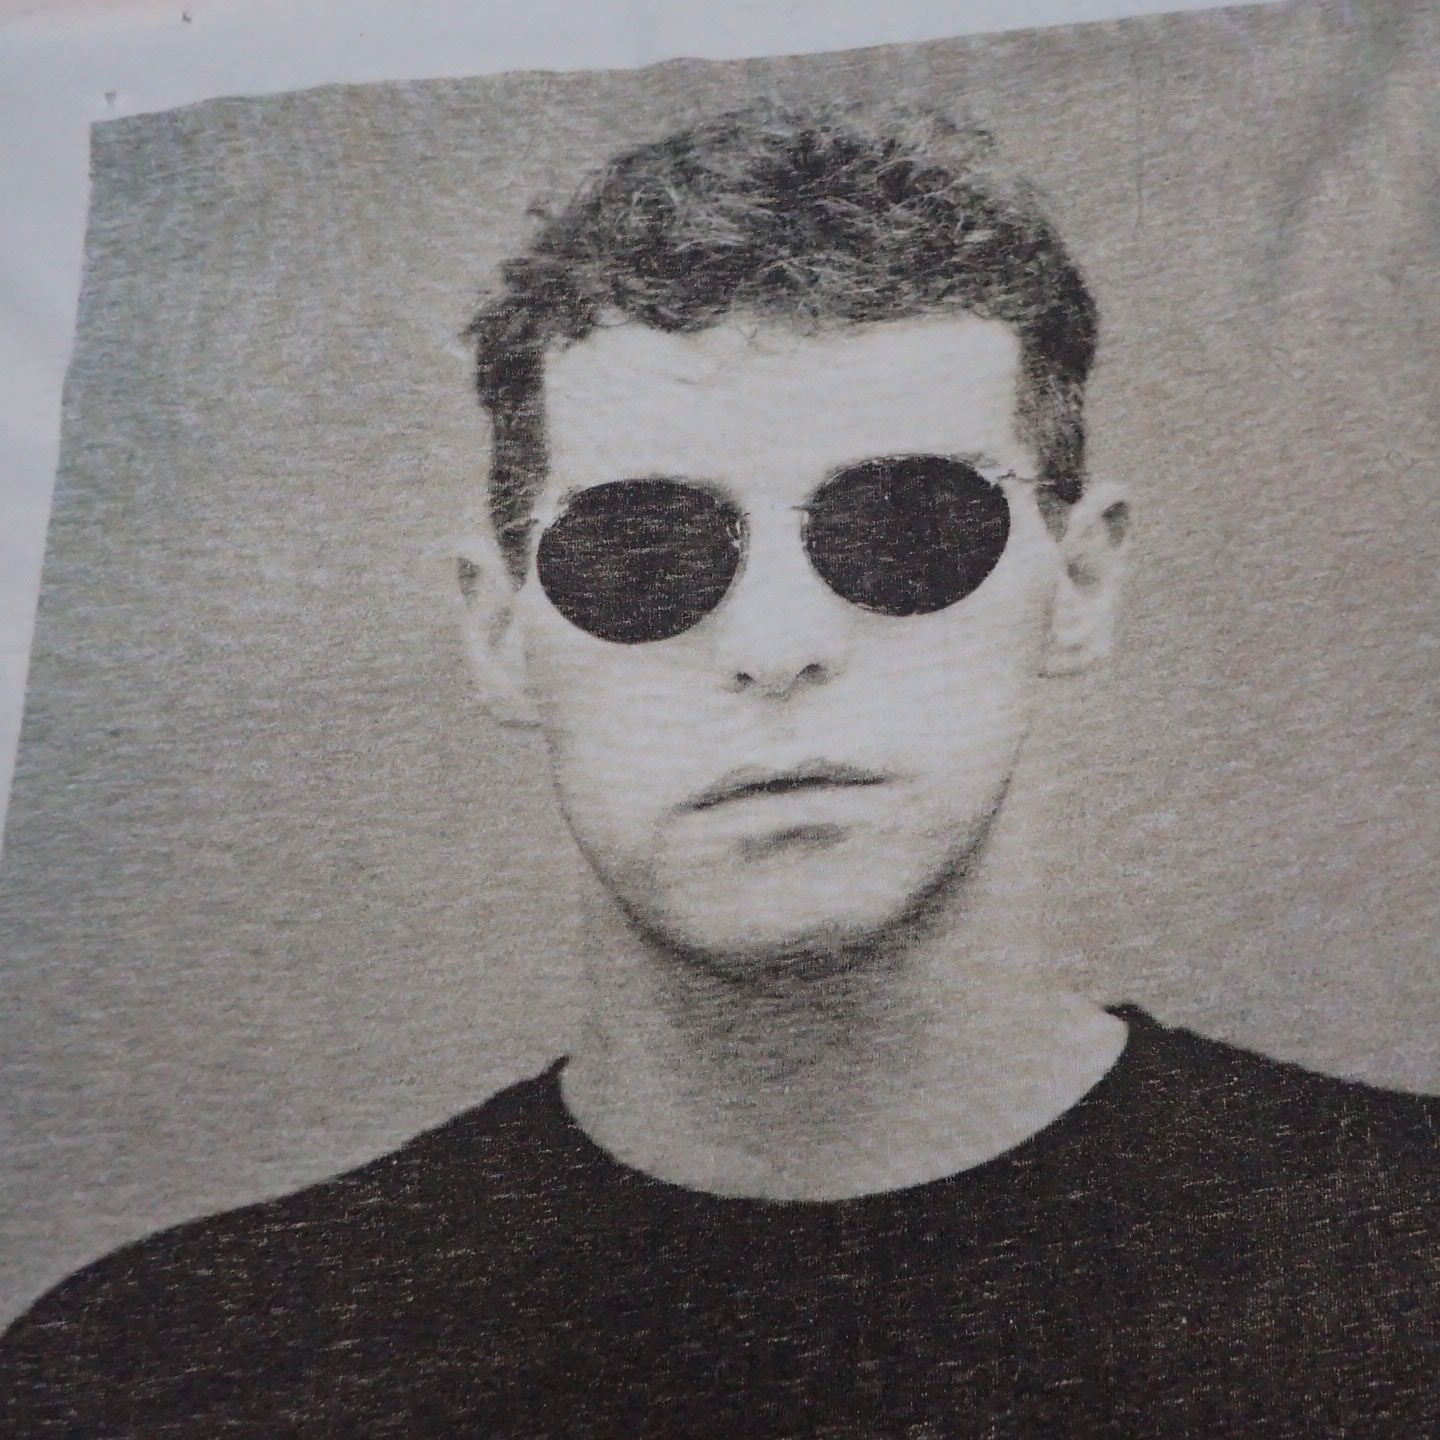 80s Pet Shop Boys " In The Night Tee"